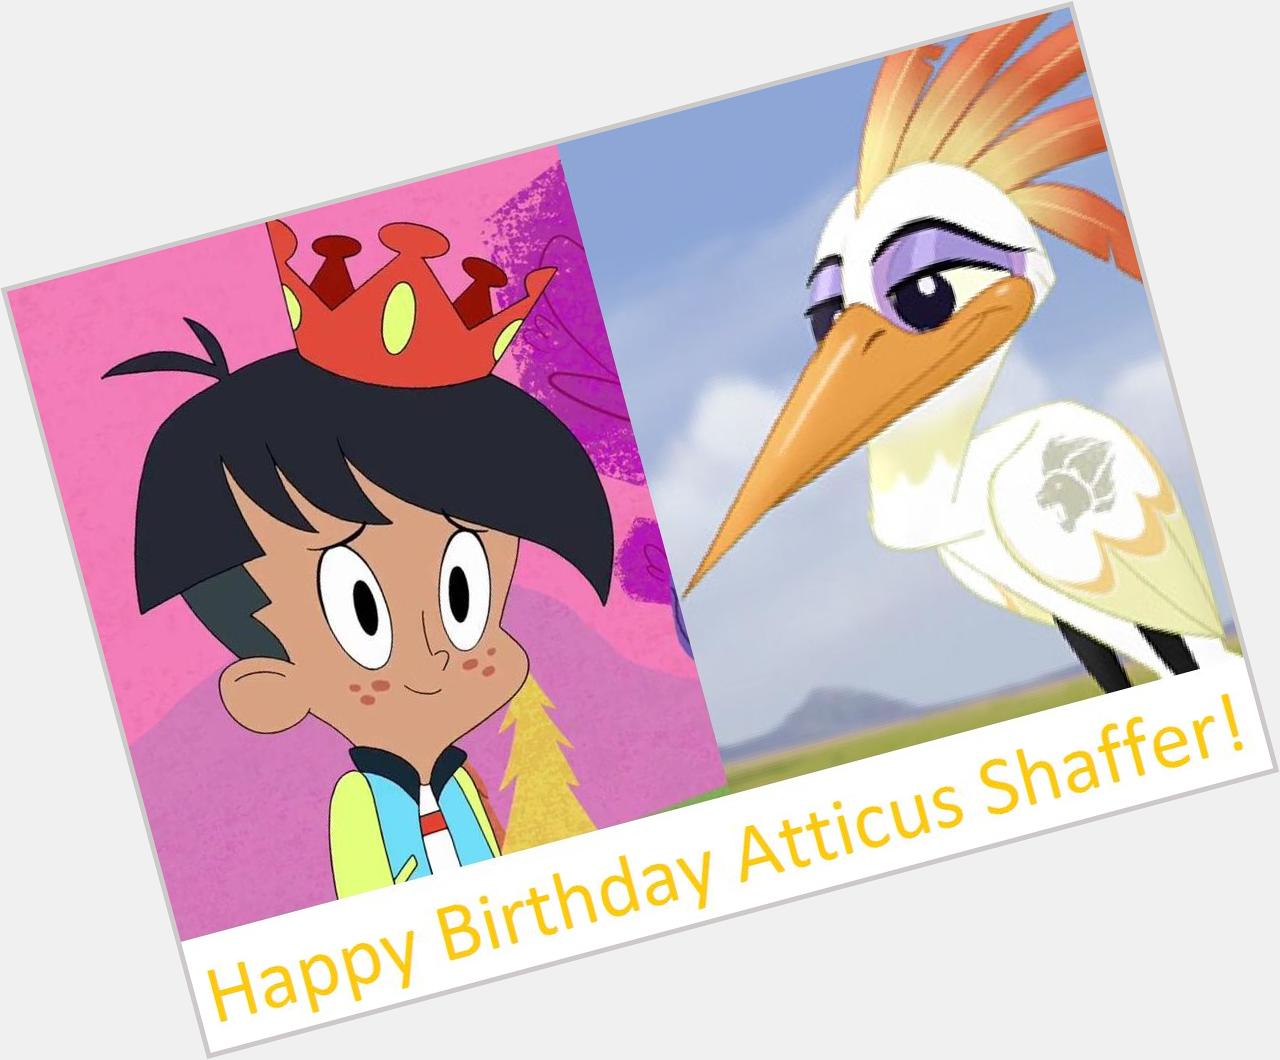 Happy Birthday Atticus Shaffer! 